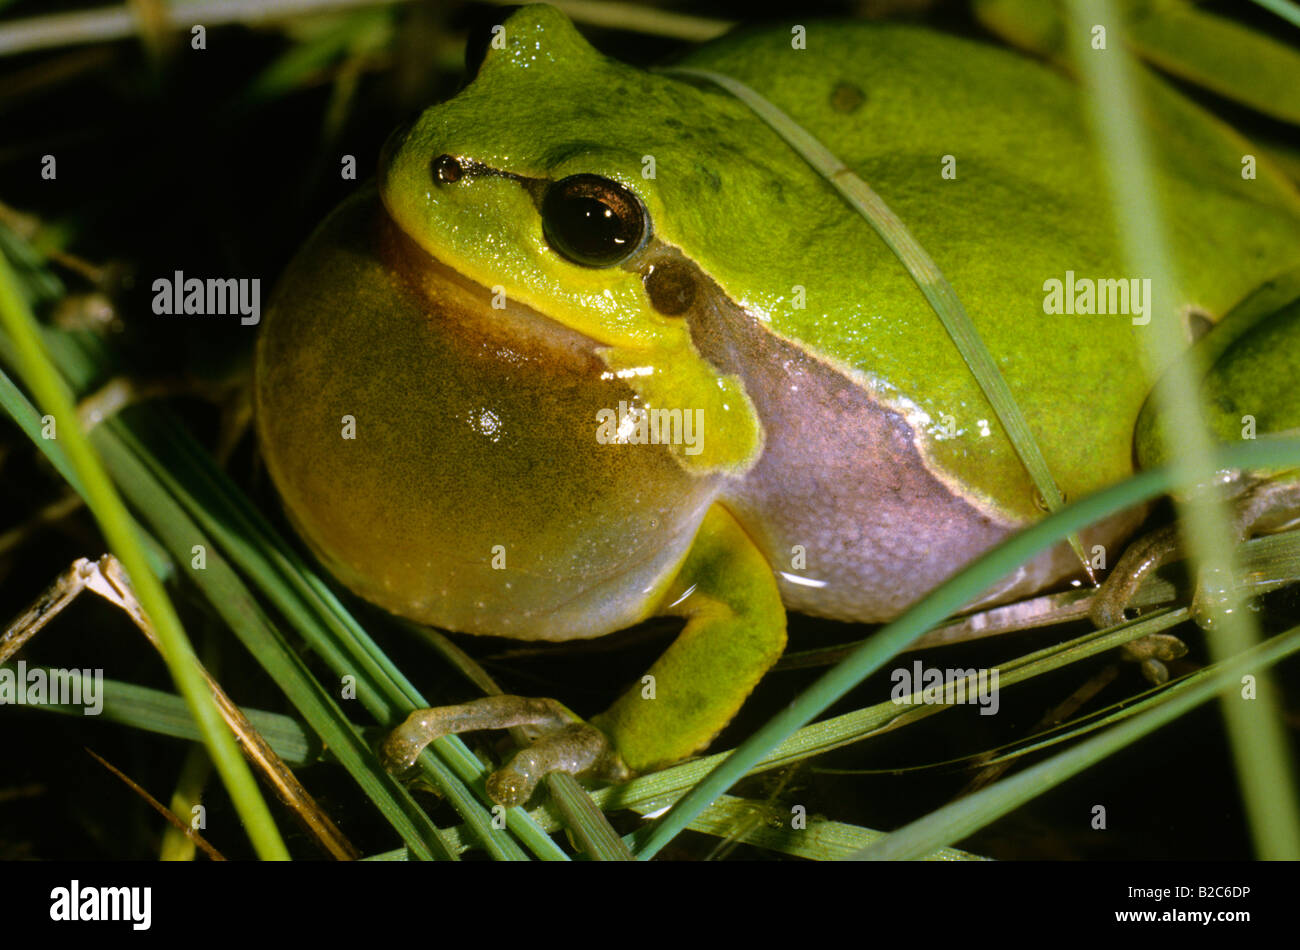 Male European tree frog (Hyla arborea), Hylidae family, sitting in water, croaking Stock Photo